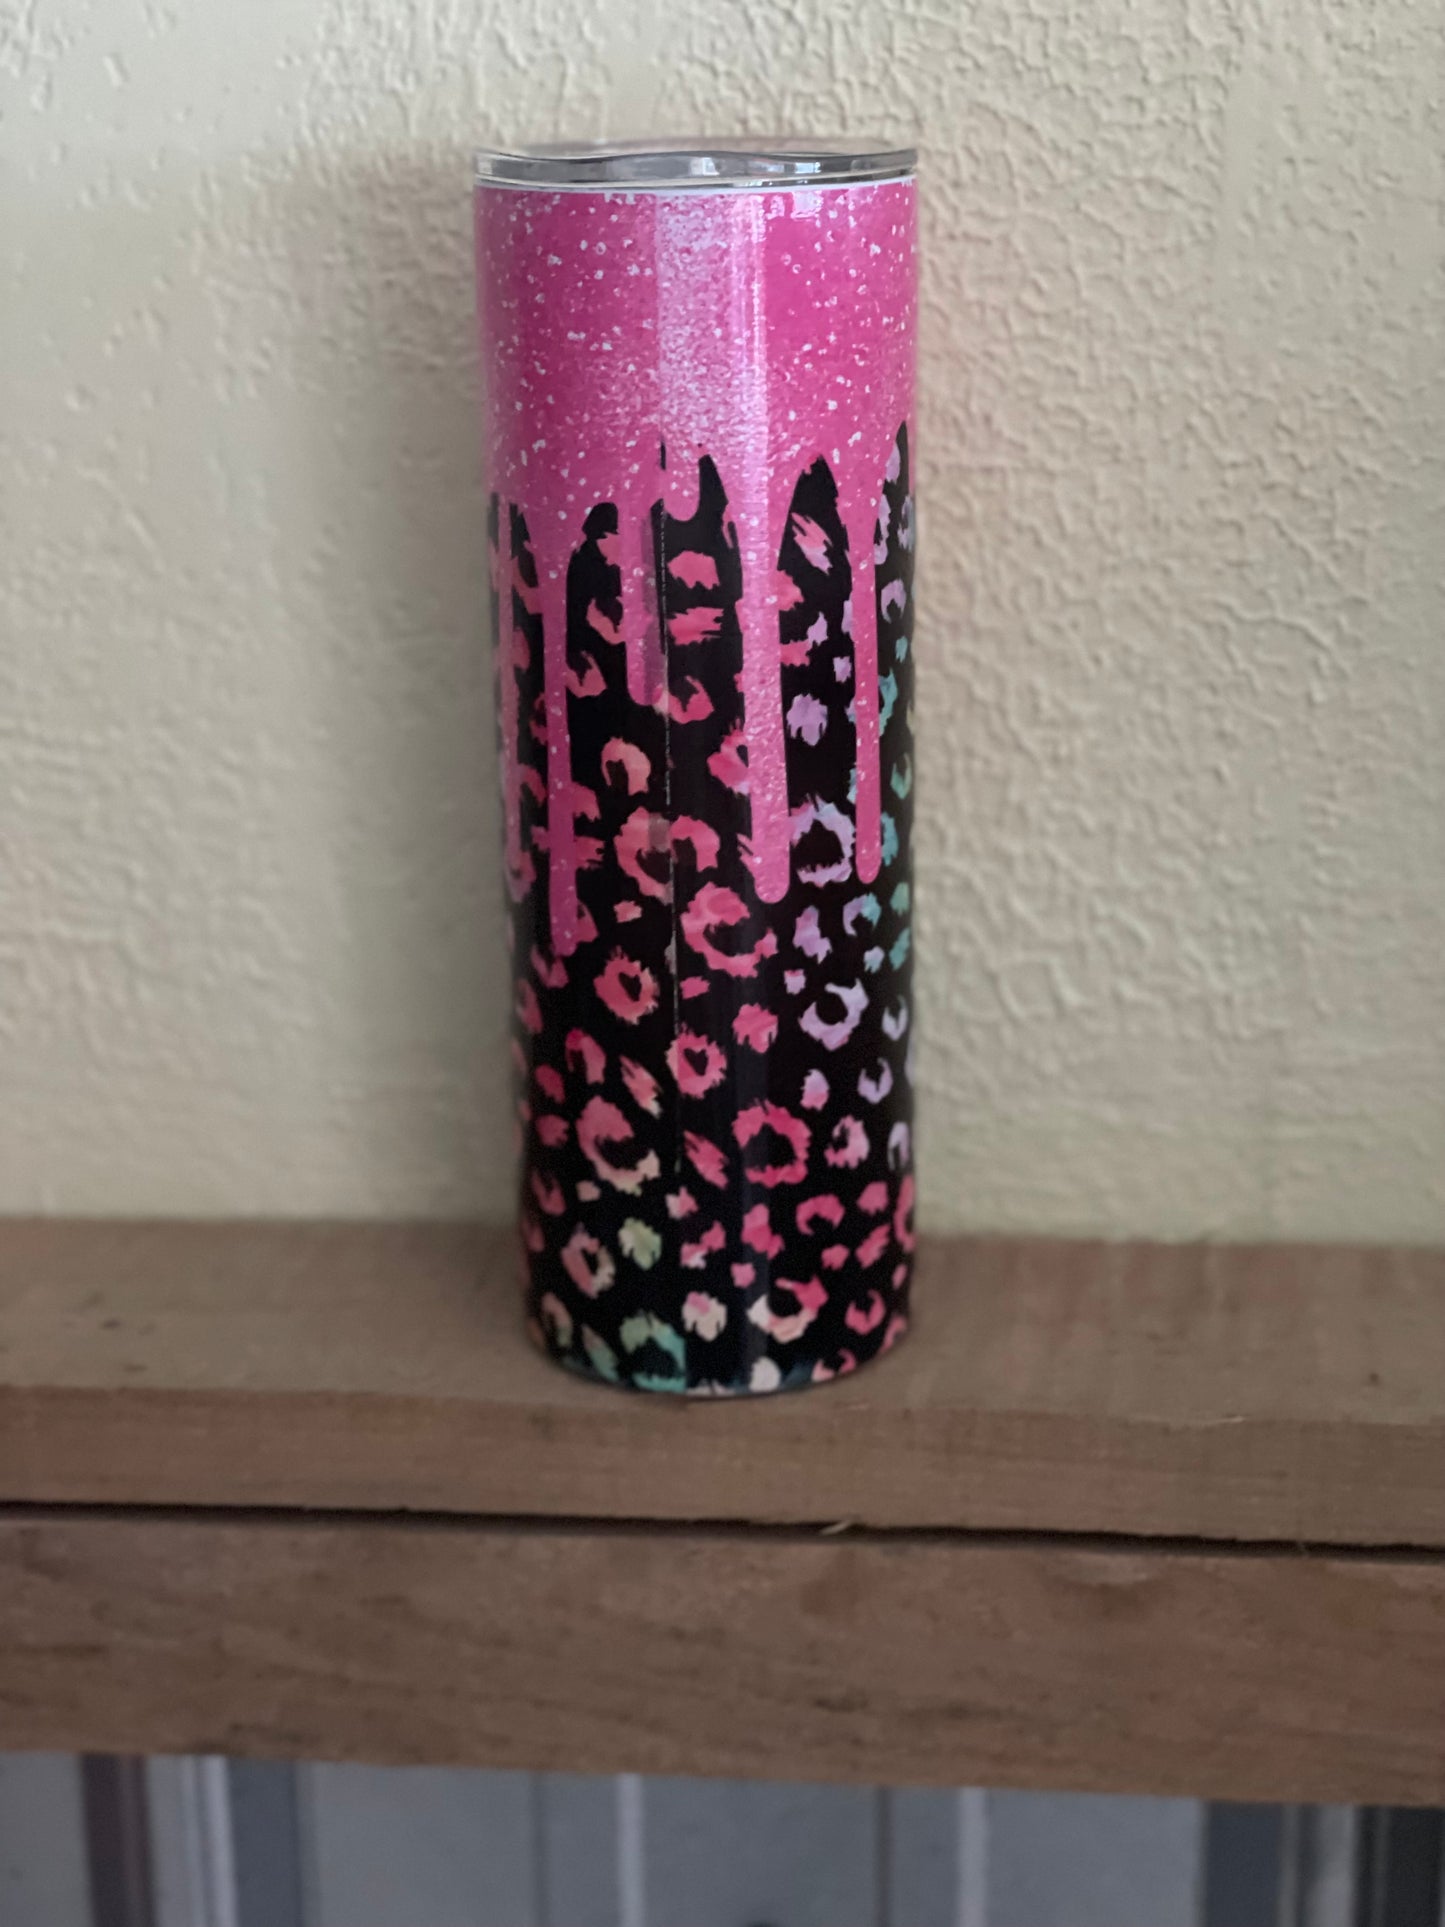 Hot Pink Glitter Drip Lisa Frank inspired leopard print bright colors